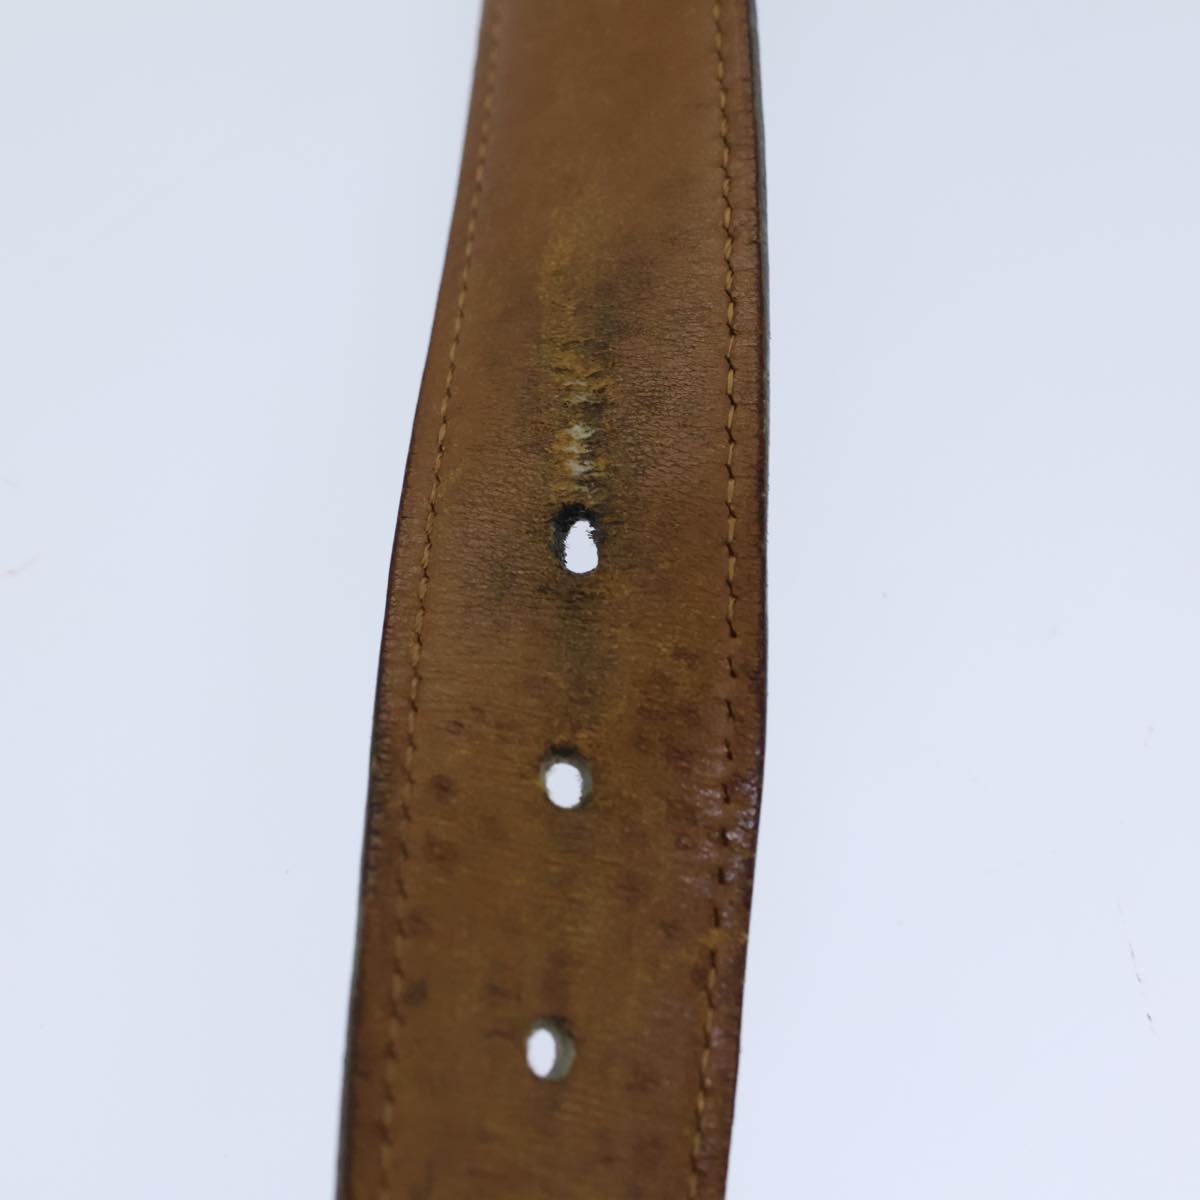 HERMES Belt Leather 36.6"" Black Auth bs13782